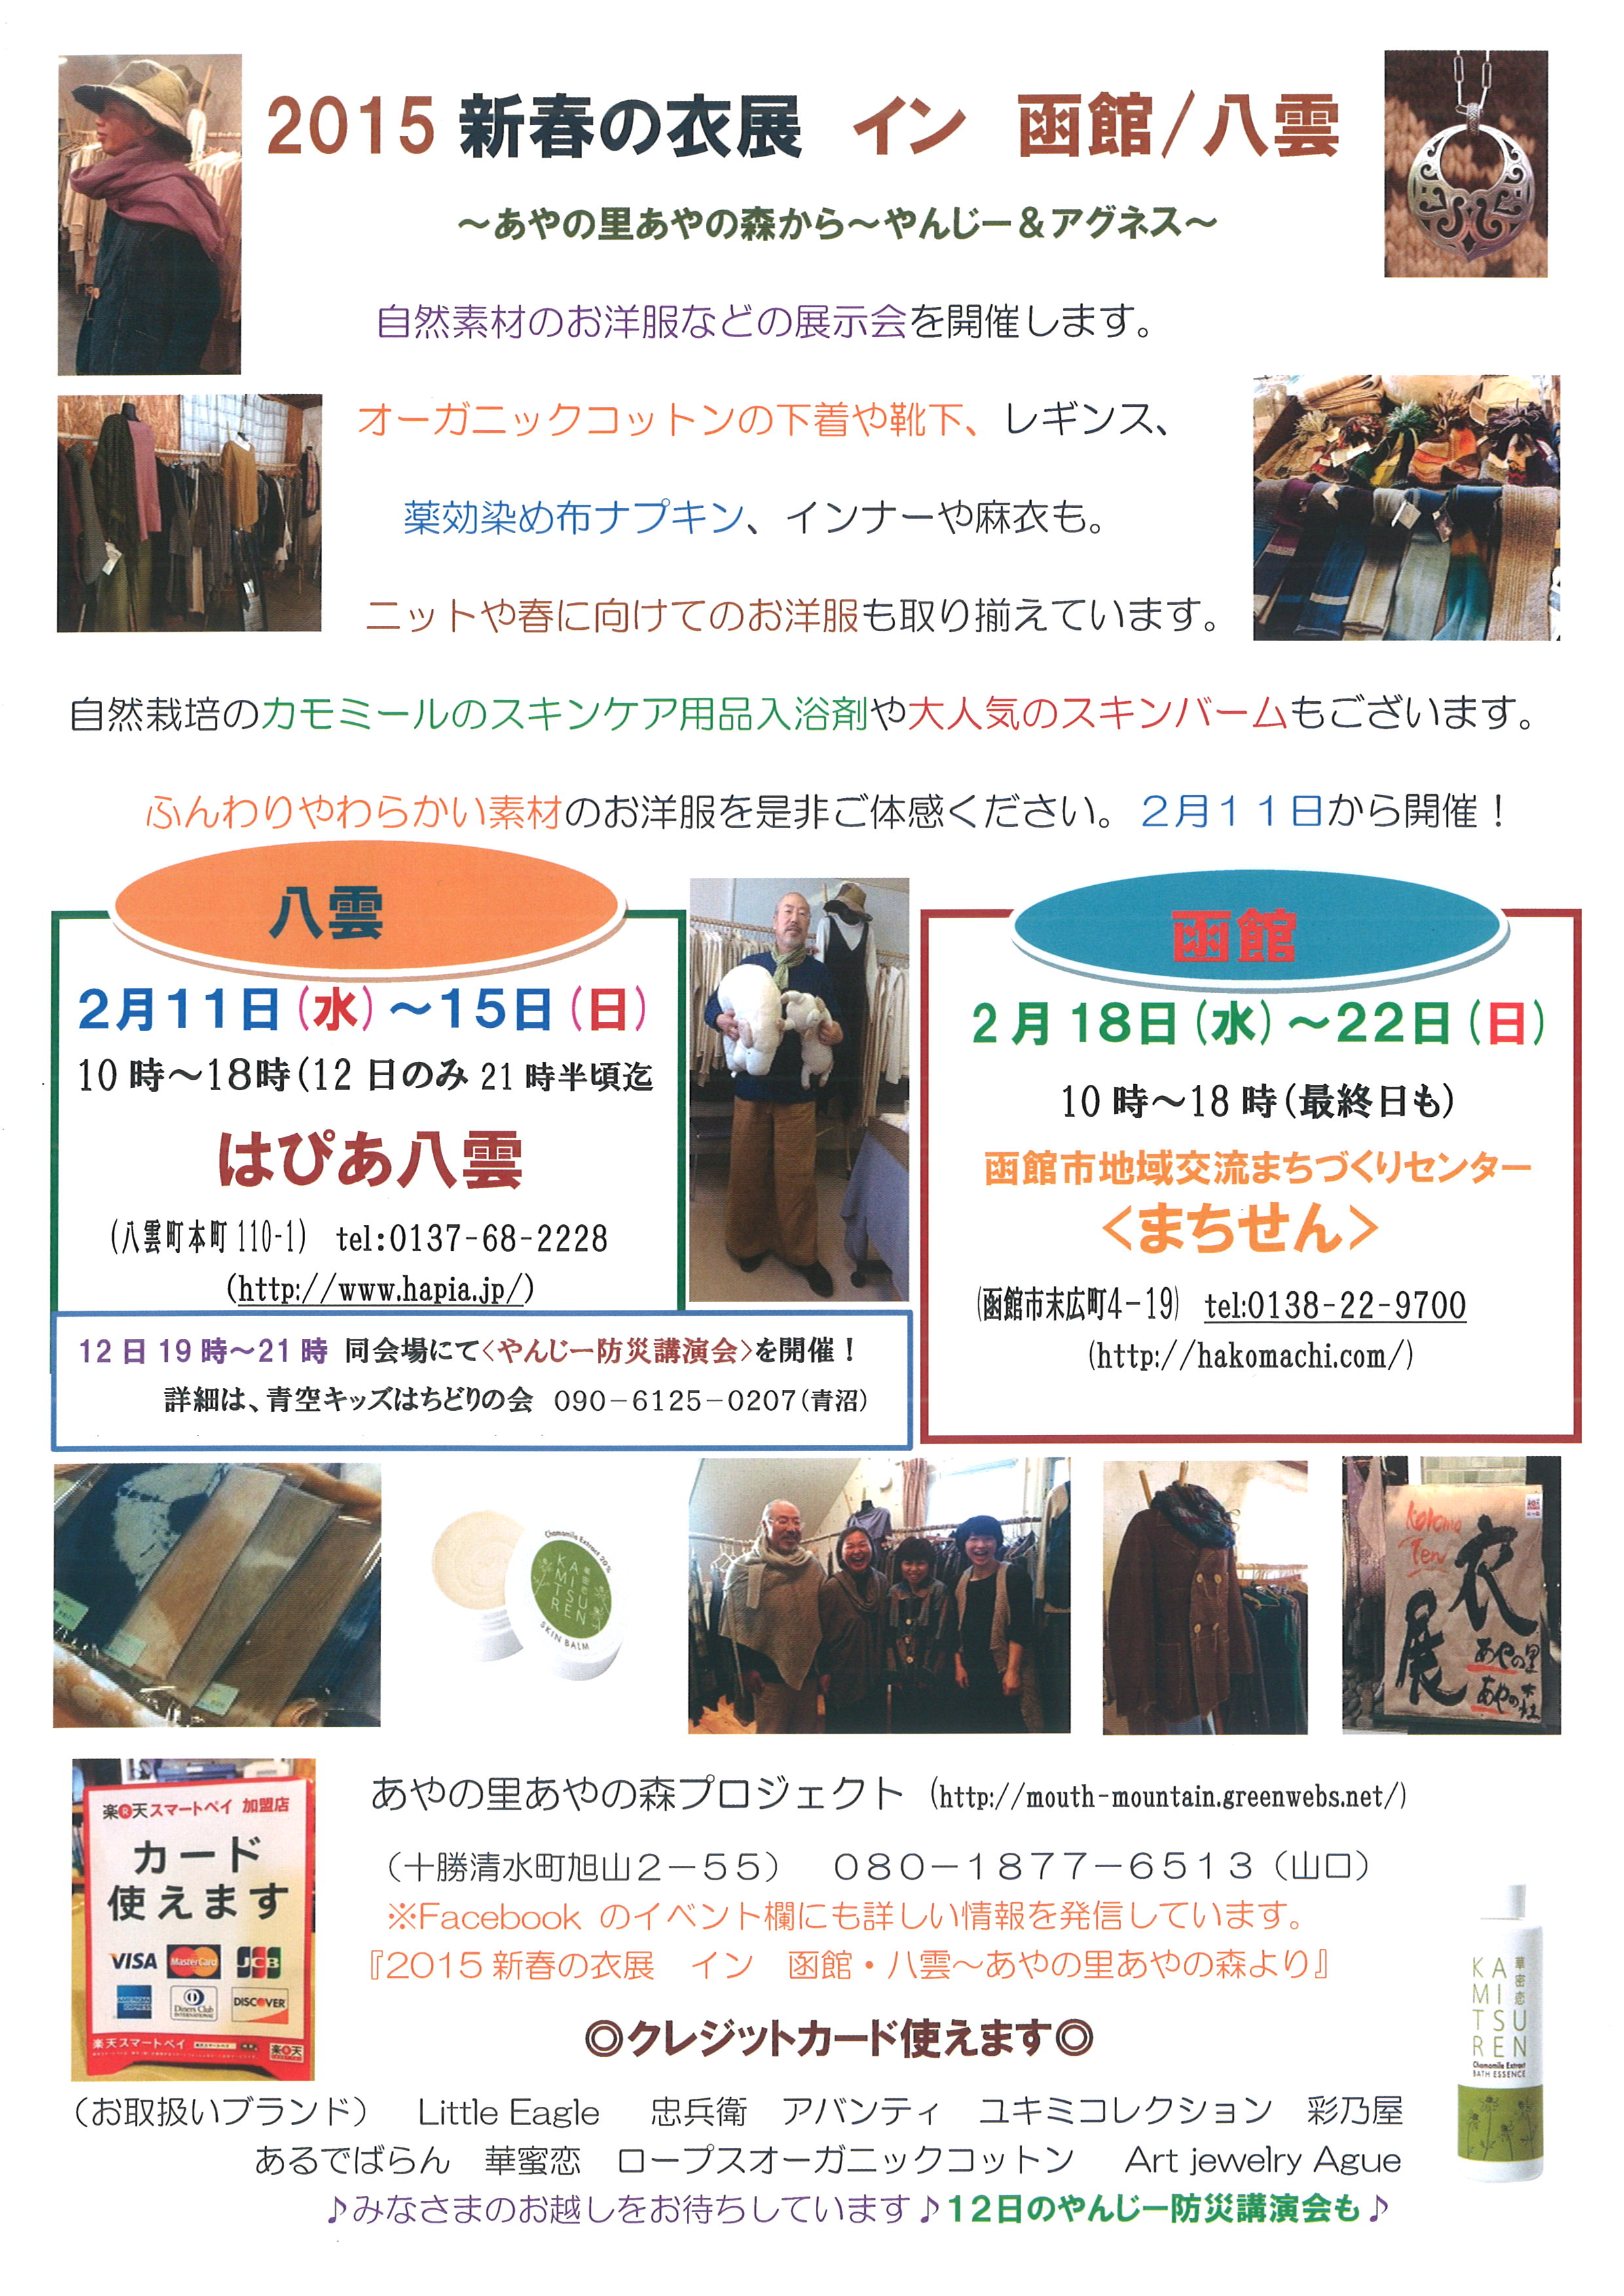 http://hakomachi.com/diary2/images/20150212135913_00001.jpg